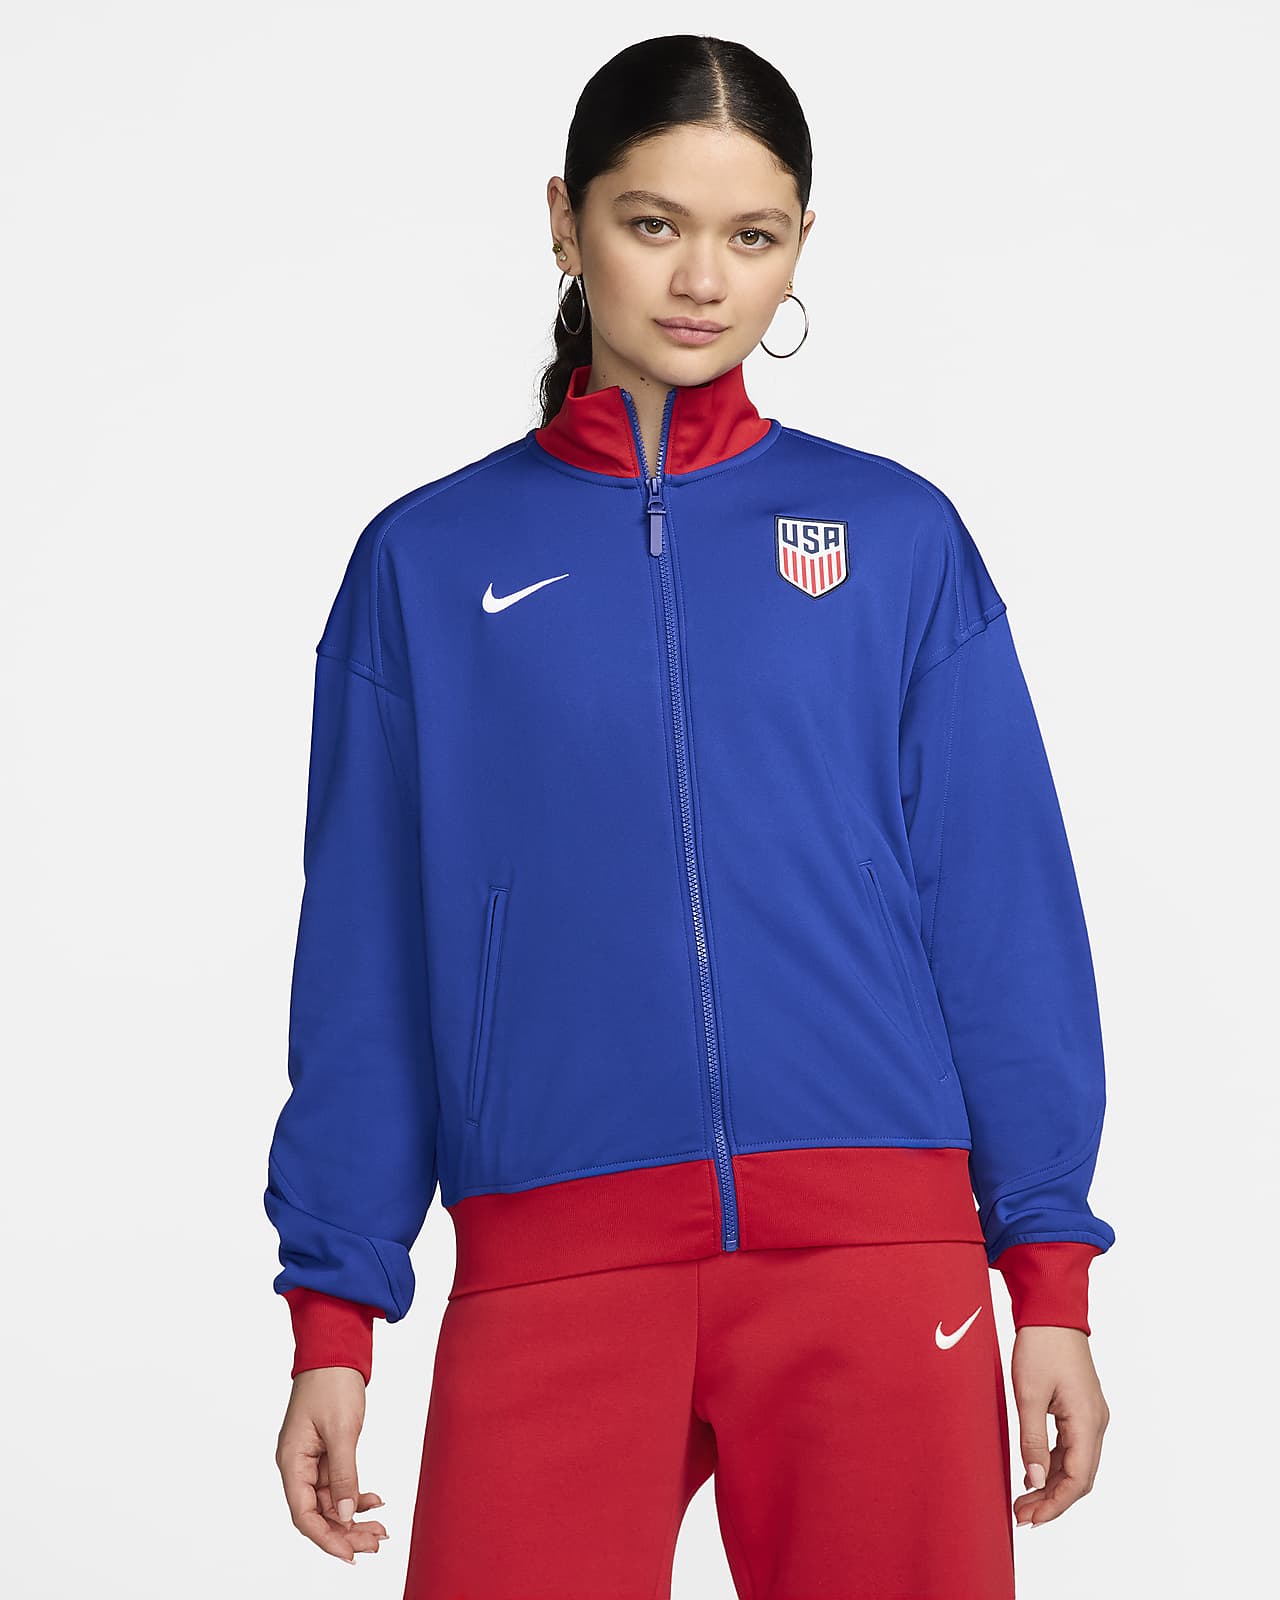 USMNT Academy Pro Women's Nike Dri-FIT Soccer Jacket